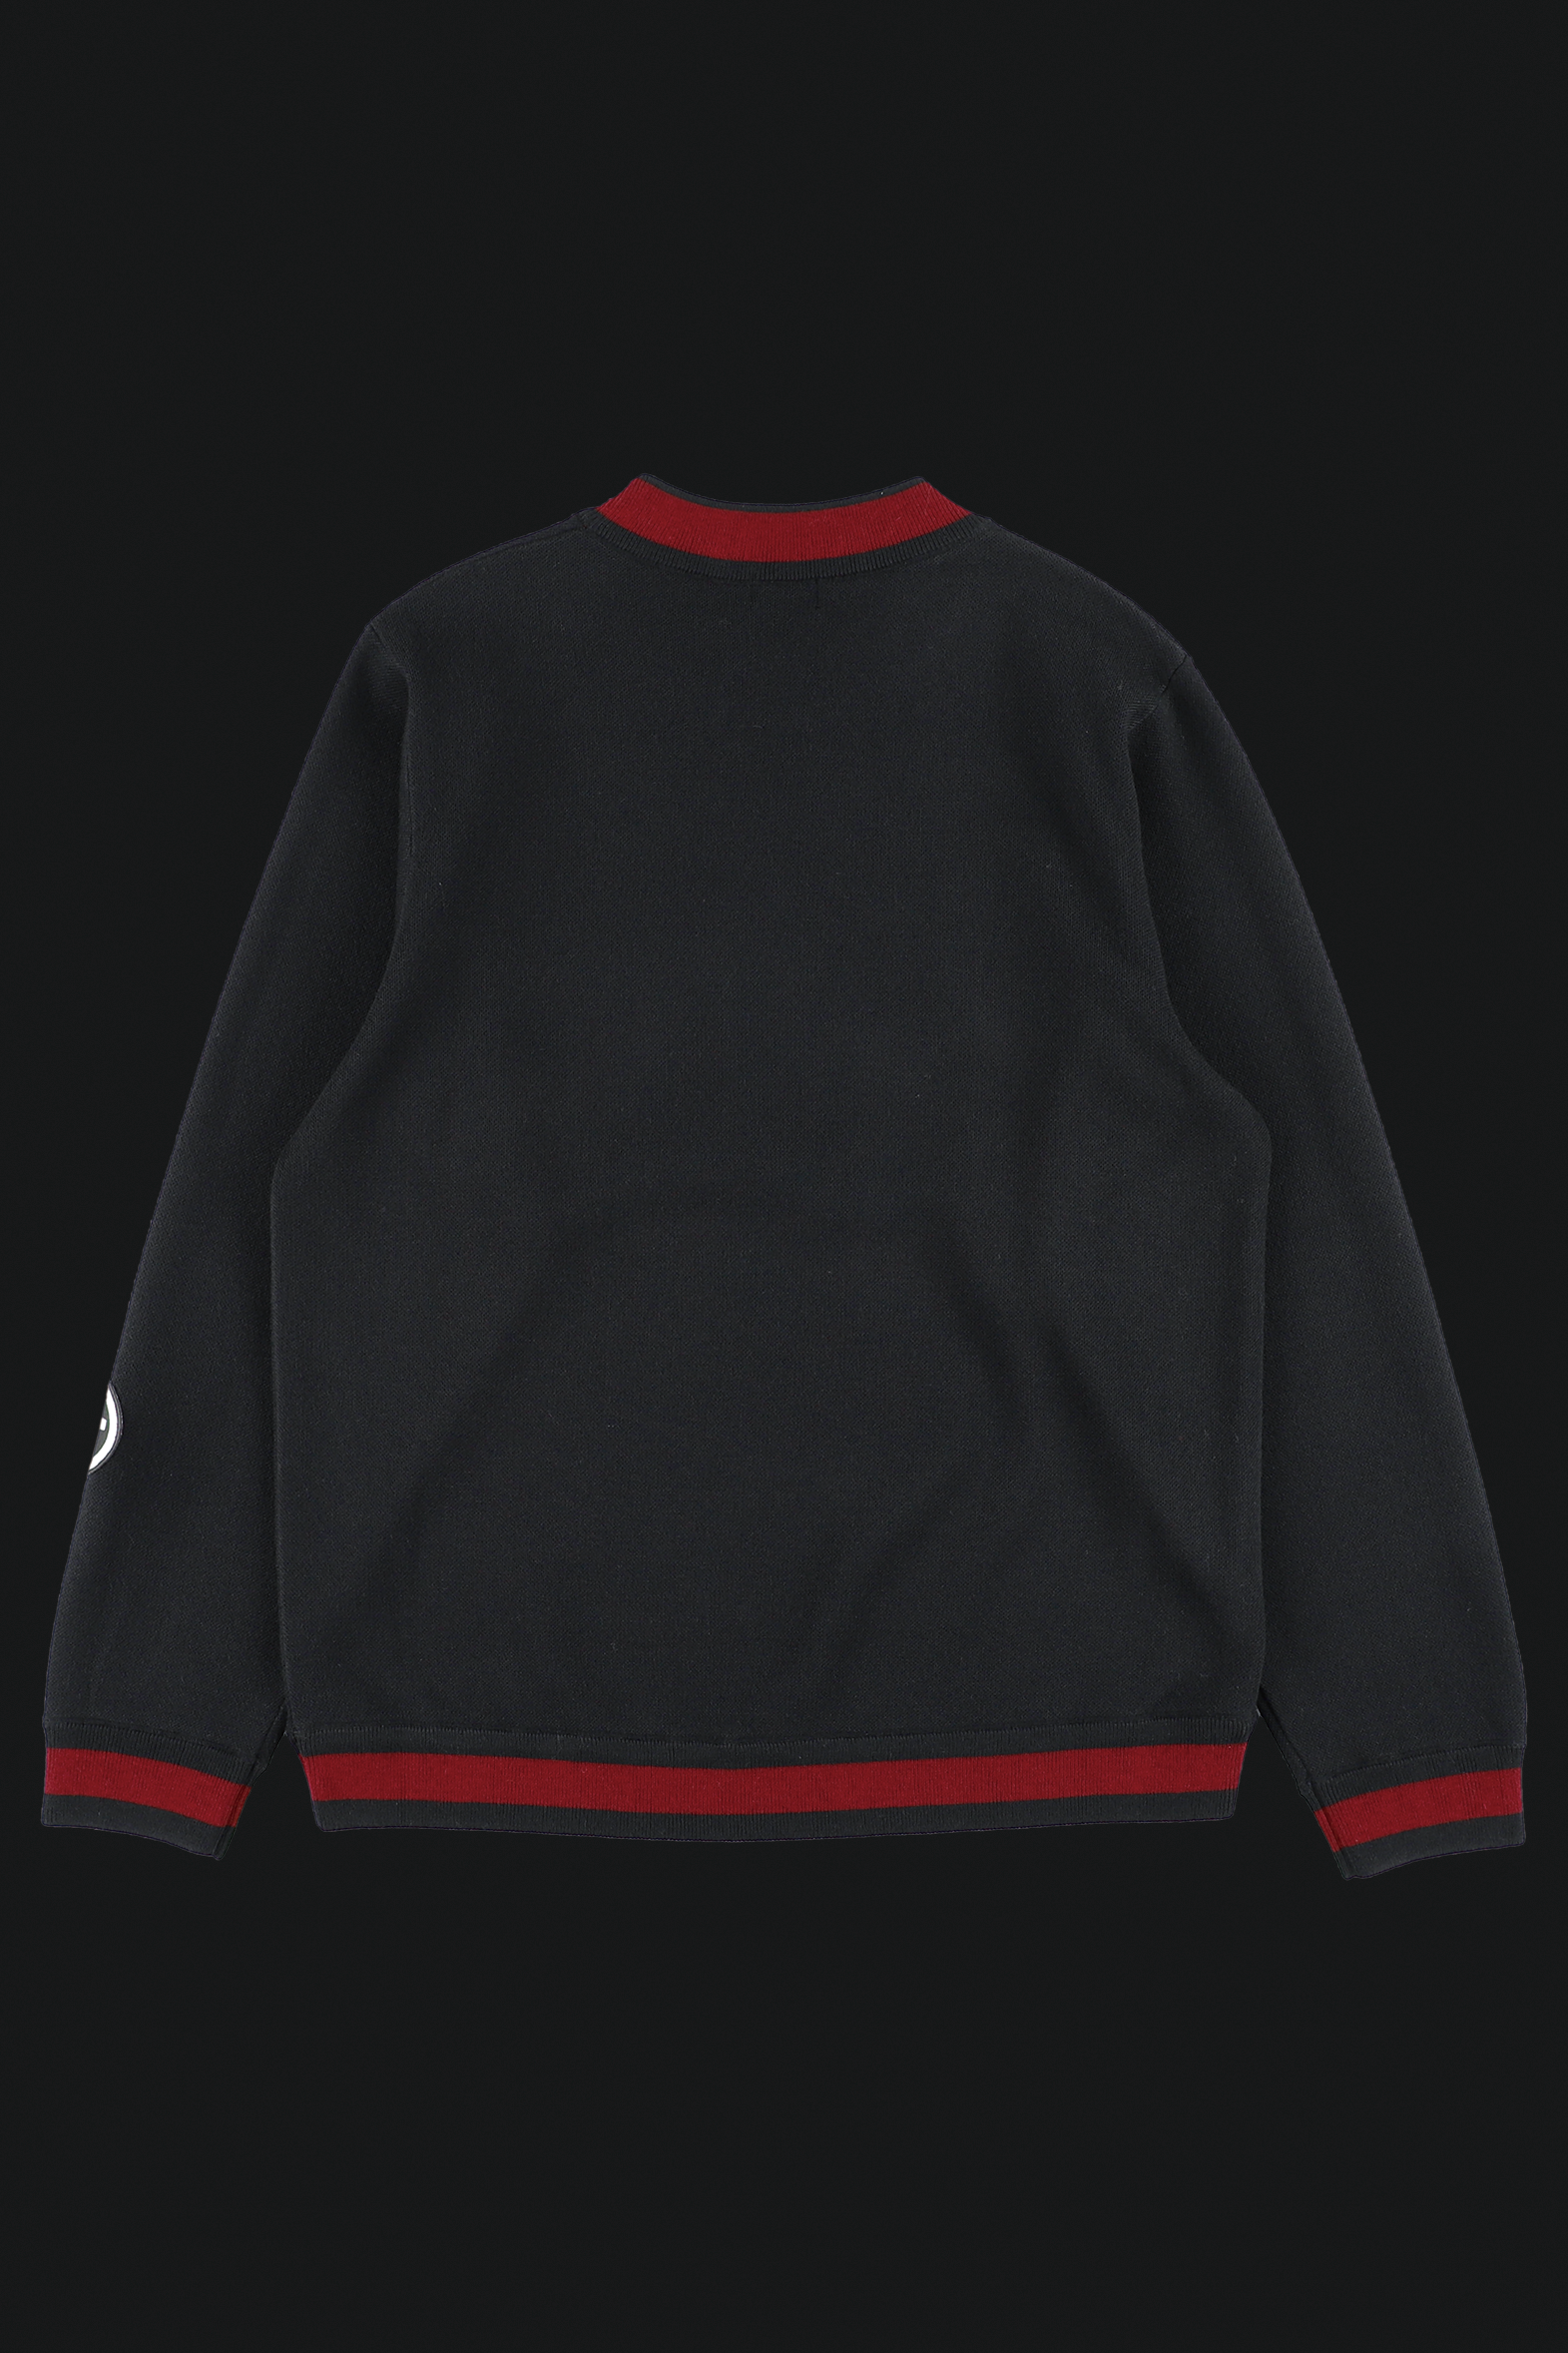 flower logo line sweater(플라워 로고 라인 스웨터)